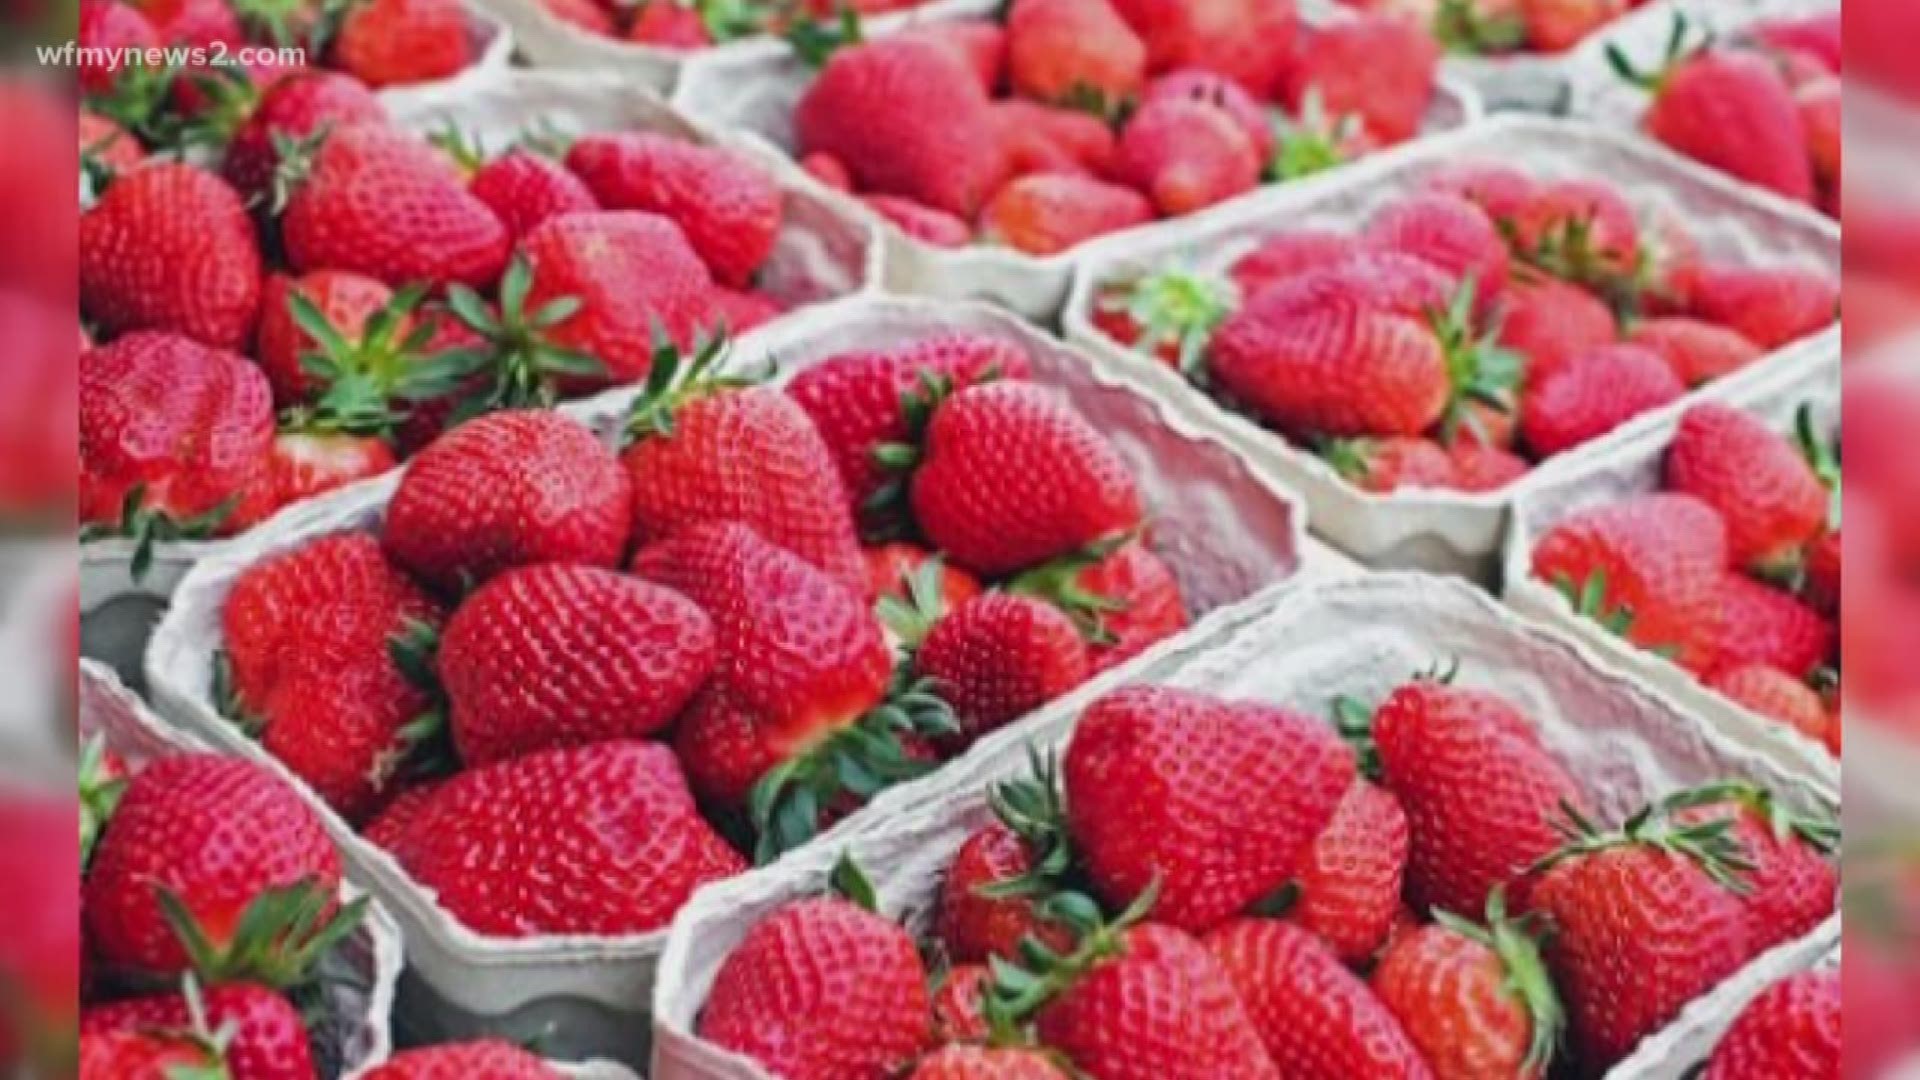 Verify Can You Safely Wash Eat Moldy Strawberries Wfmynews2 Com,Shrimp Newburg